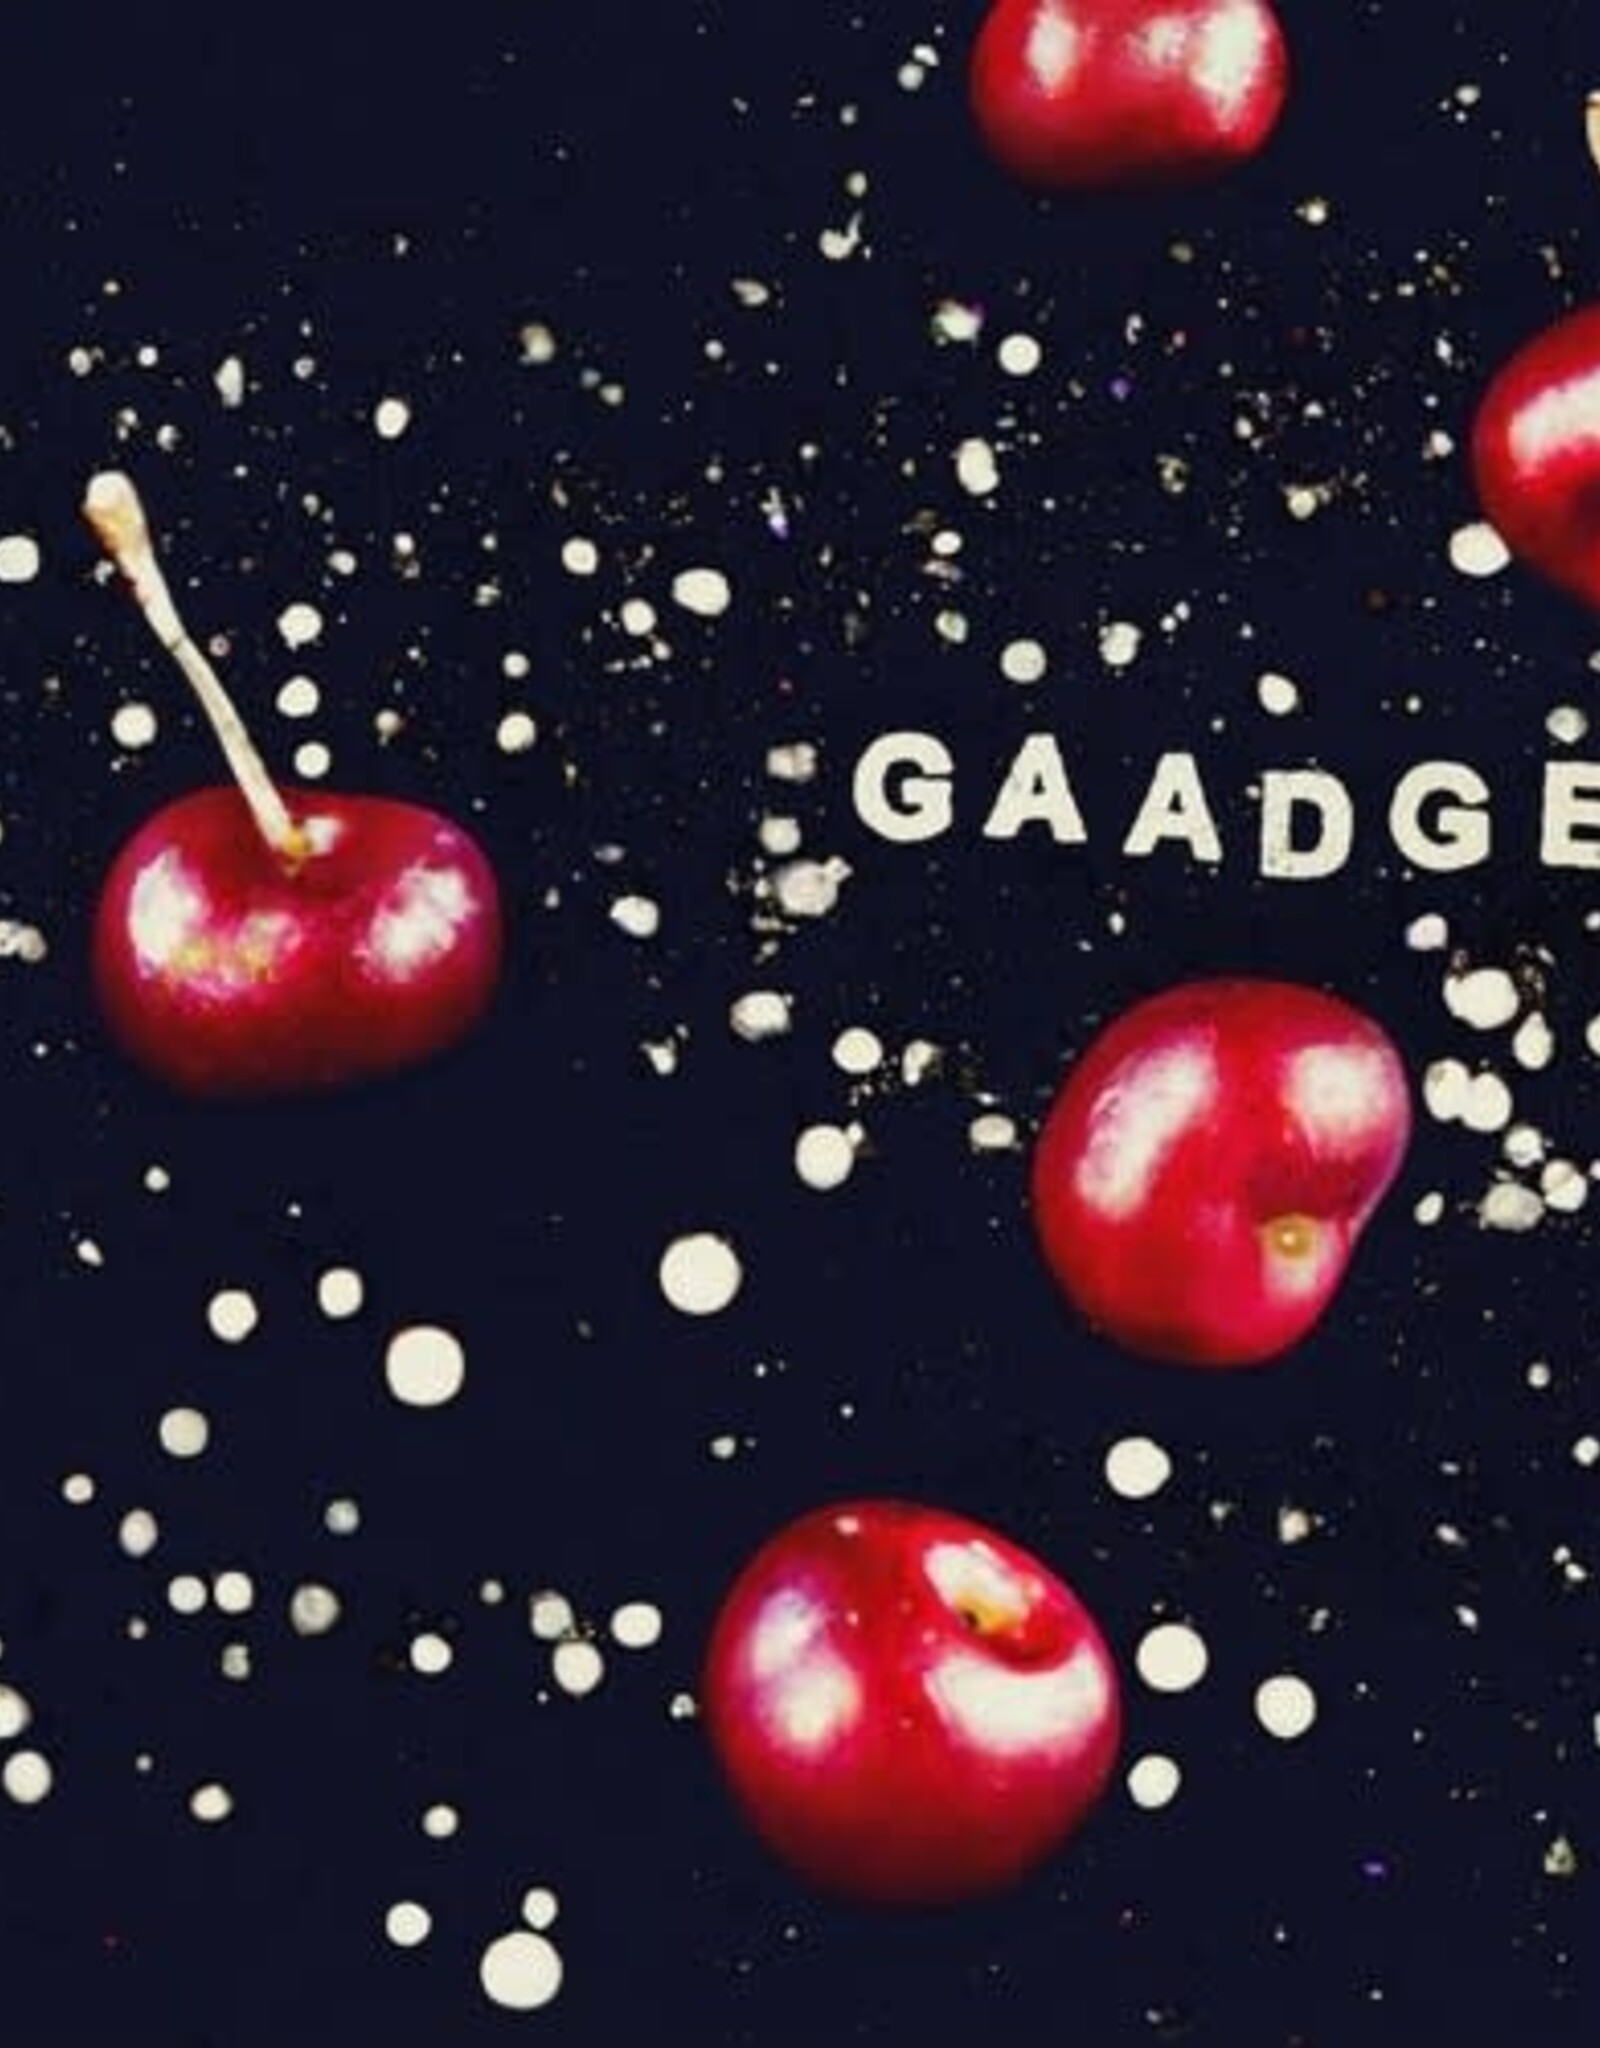 Gaadge - Somewhere Down Below